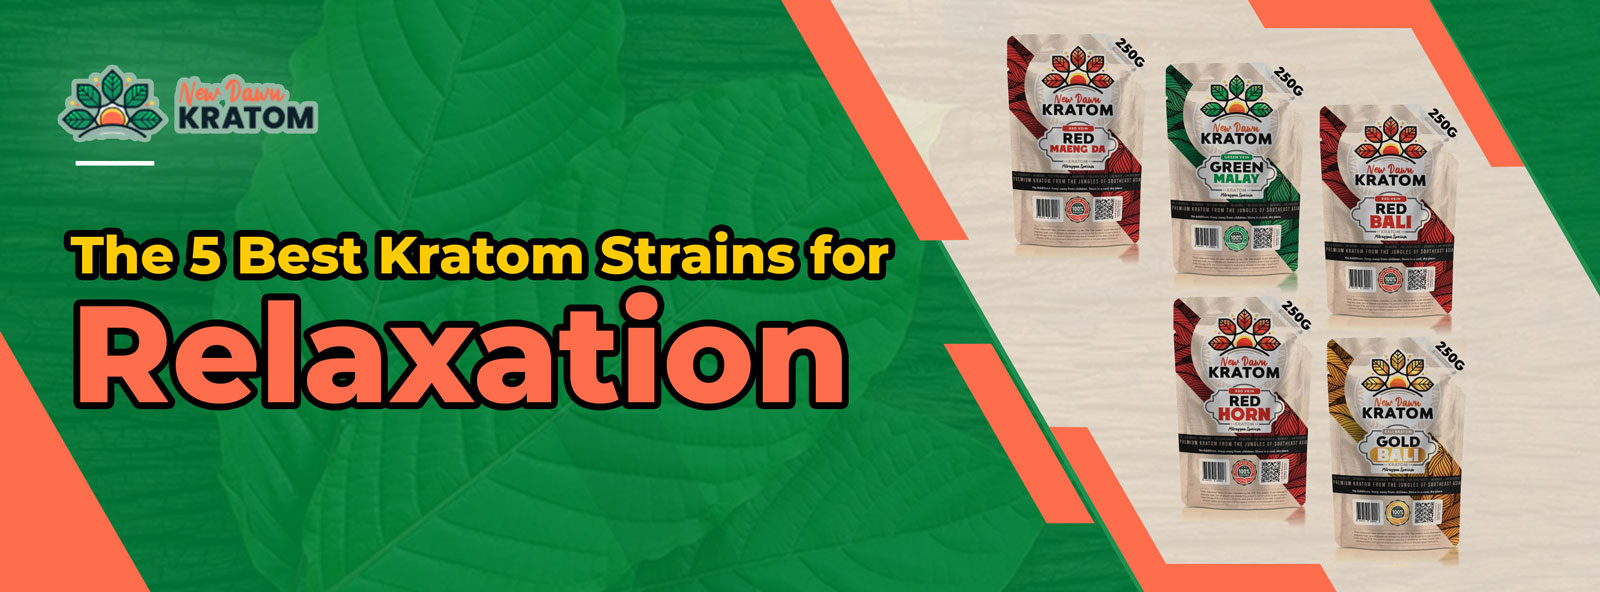 the 5 best kratom strains for relaxation